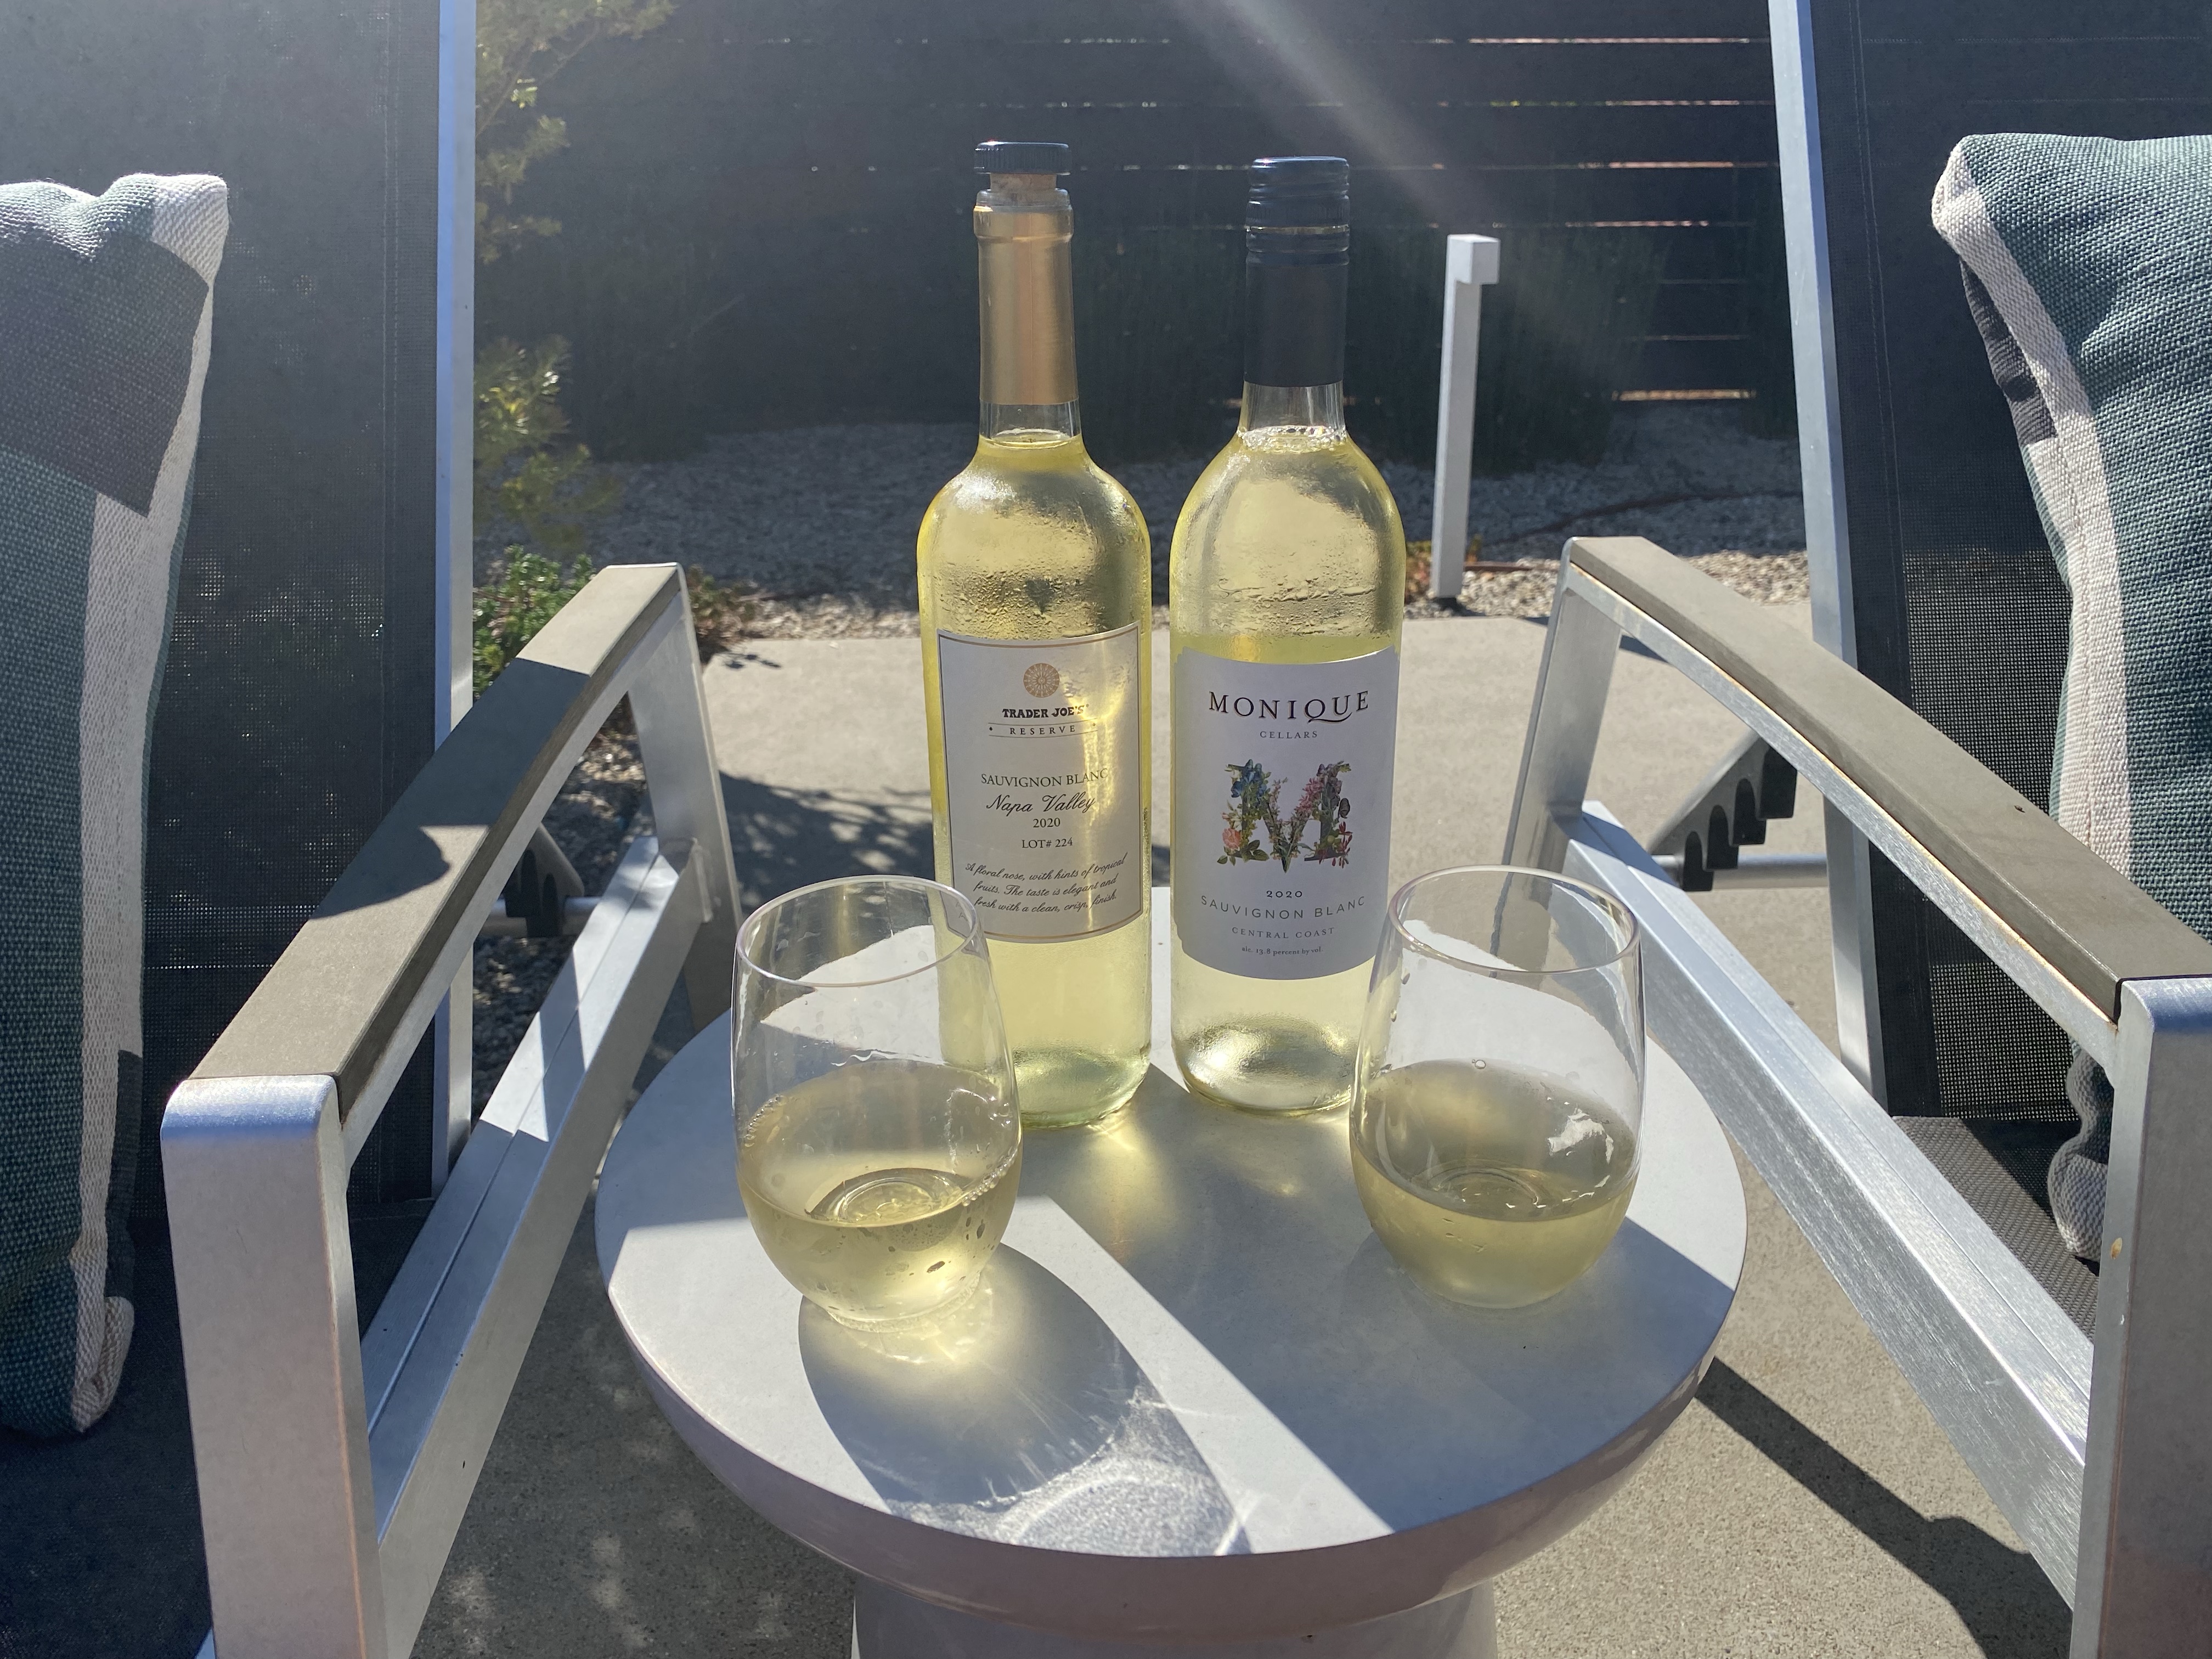 Bottles and glasses of Trader Joe's Reserve Napa 2020 Sauvignon Blanc (L) and Monique Cellars 2020 Sauvignon Blanc (R)